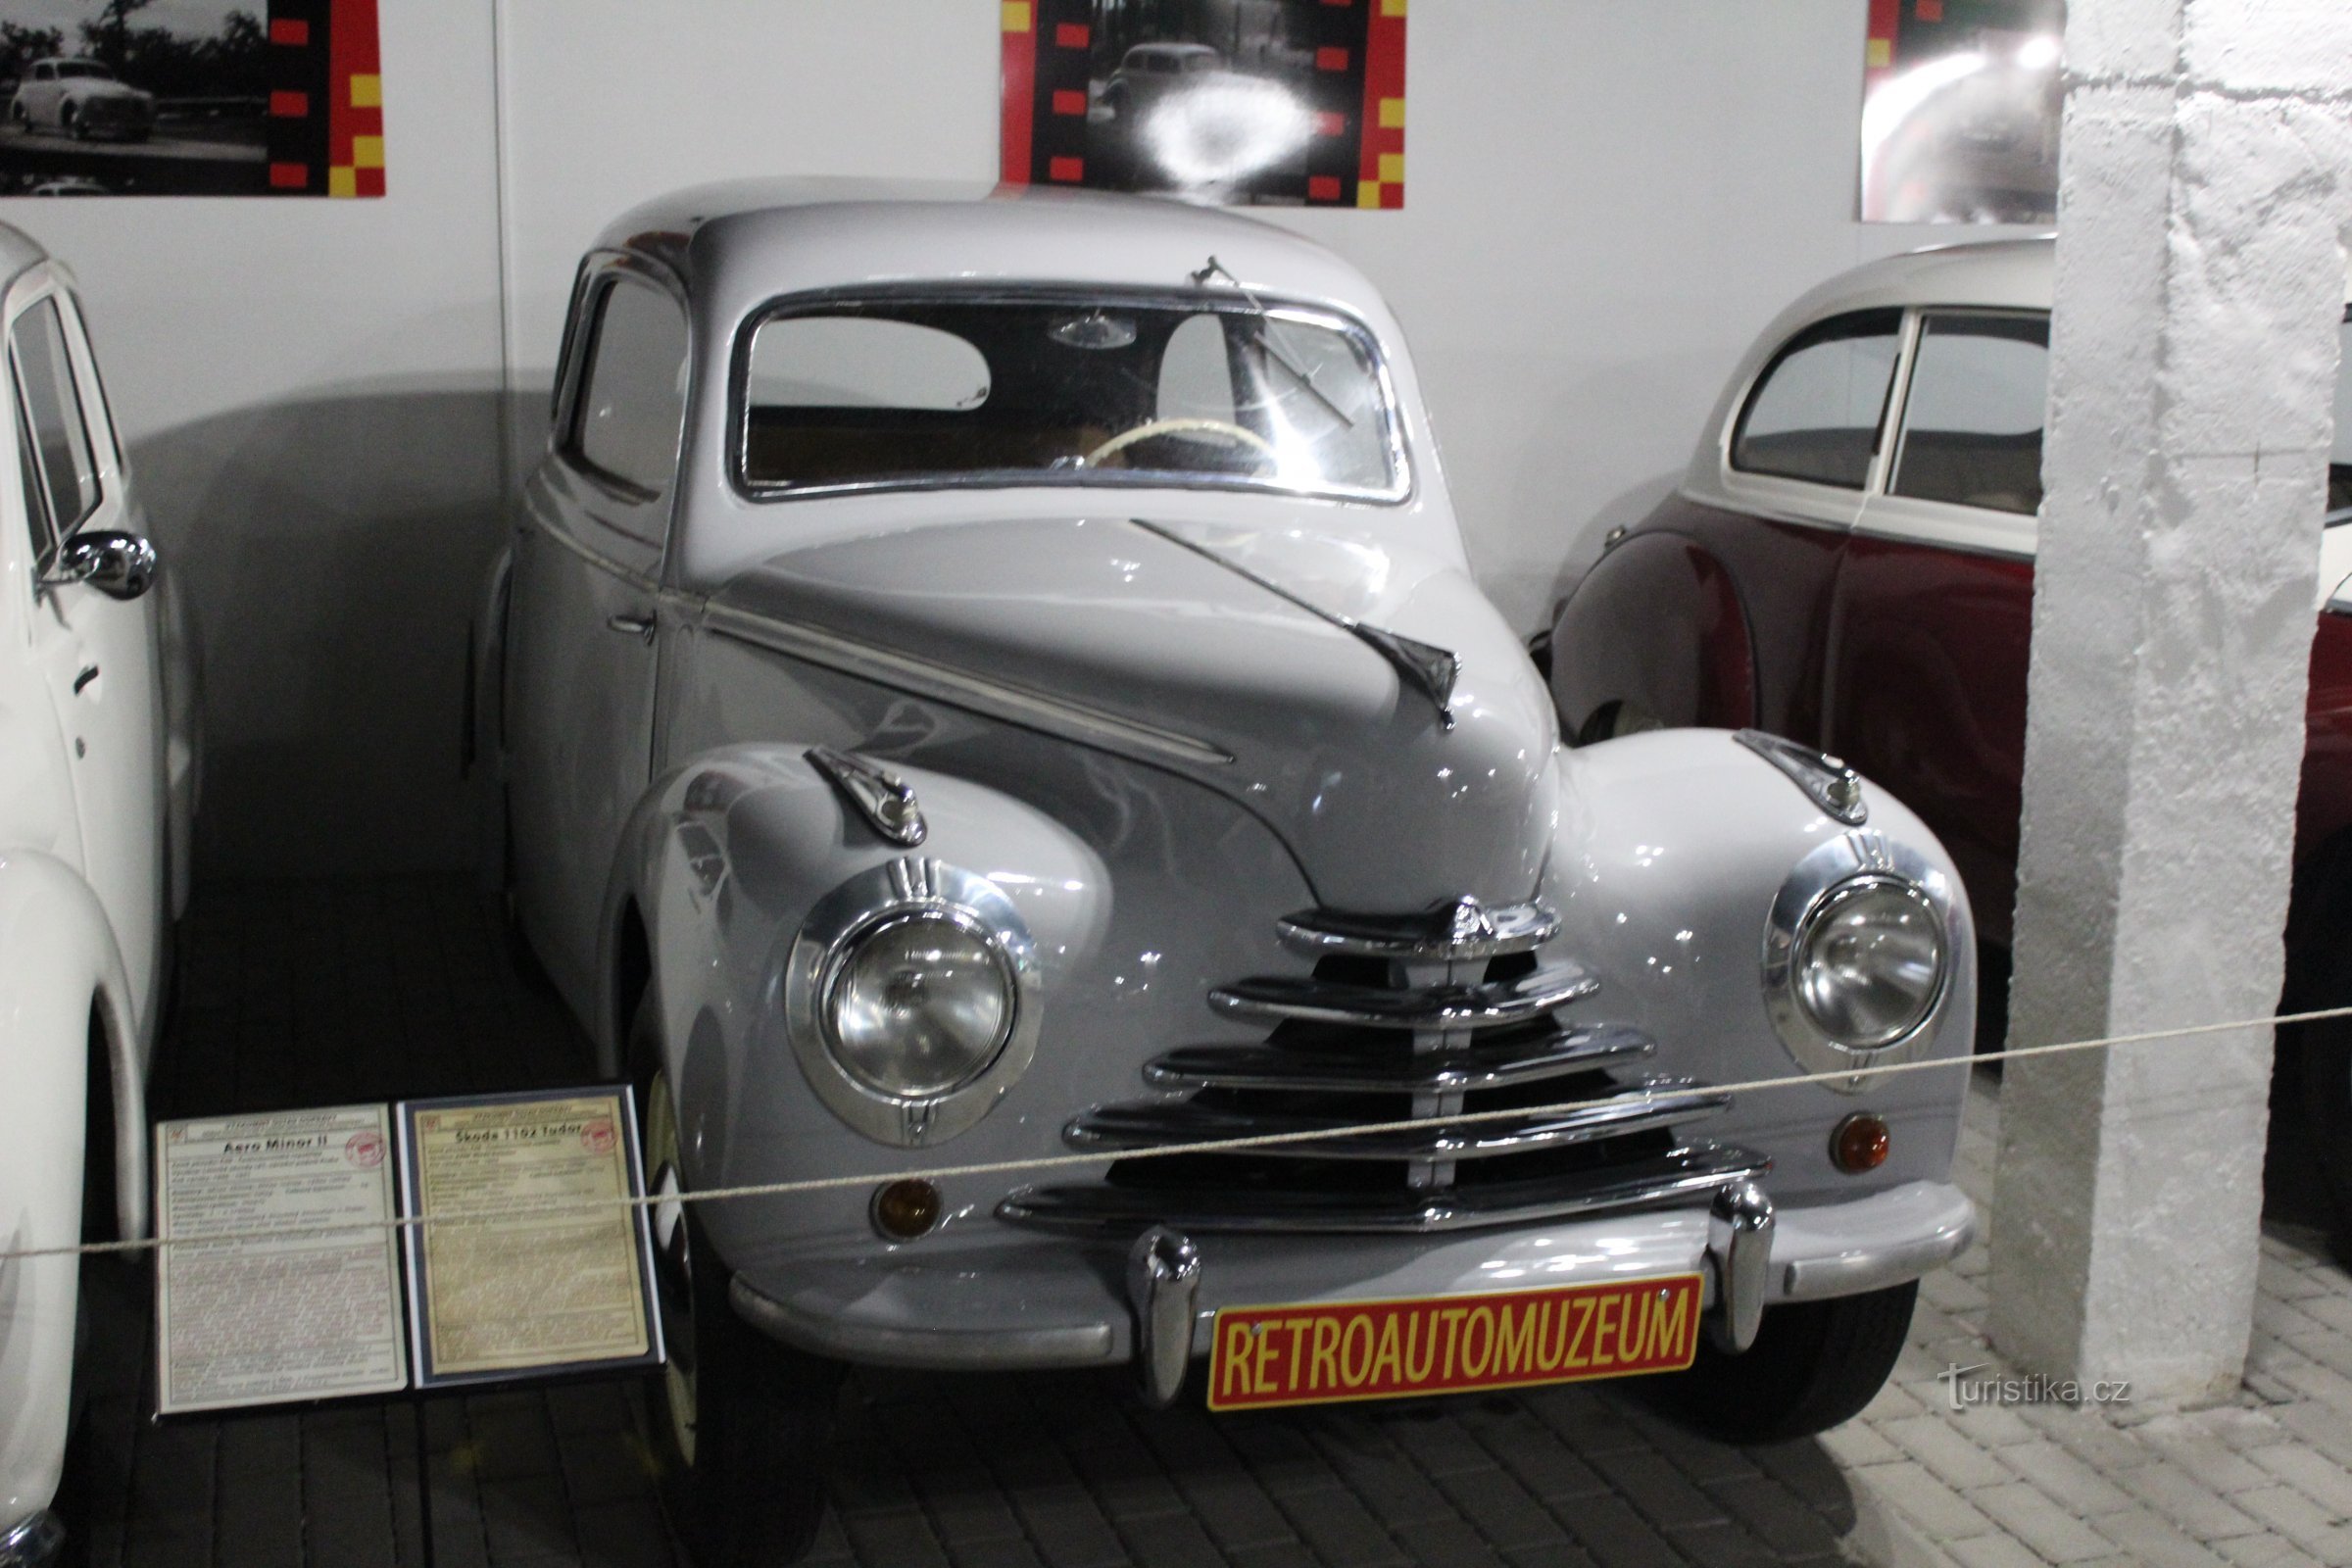 STRNADICE-复古汽车博物馆